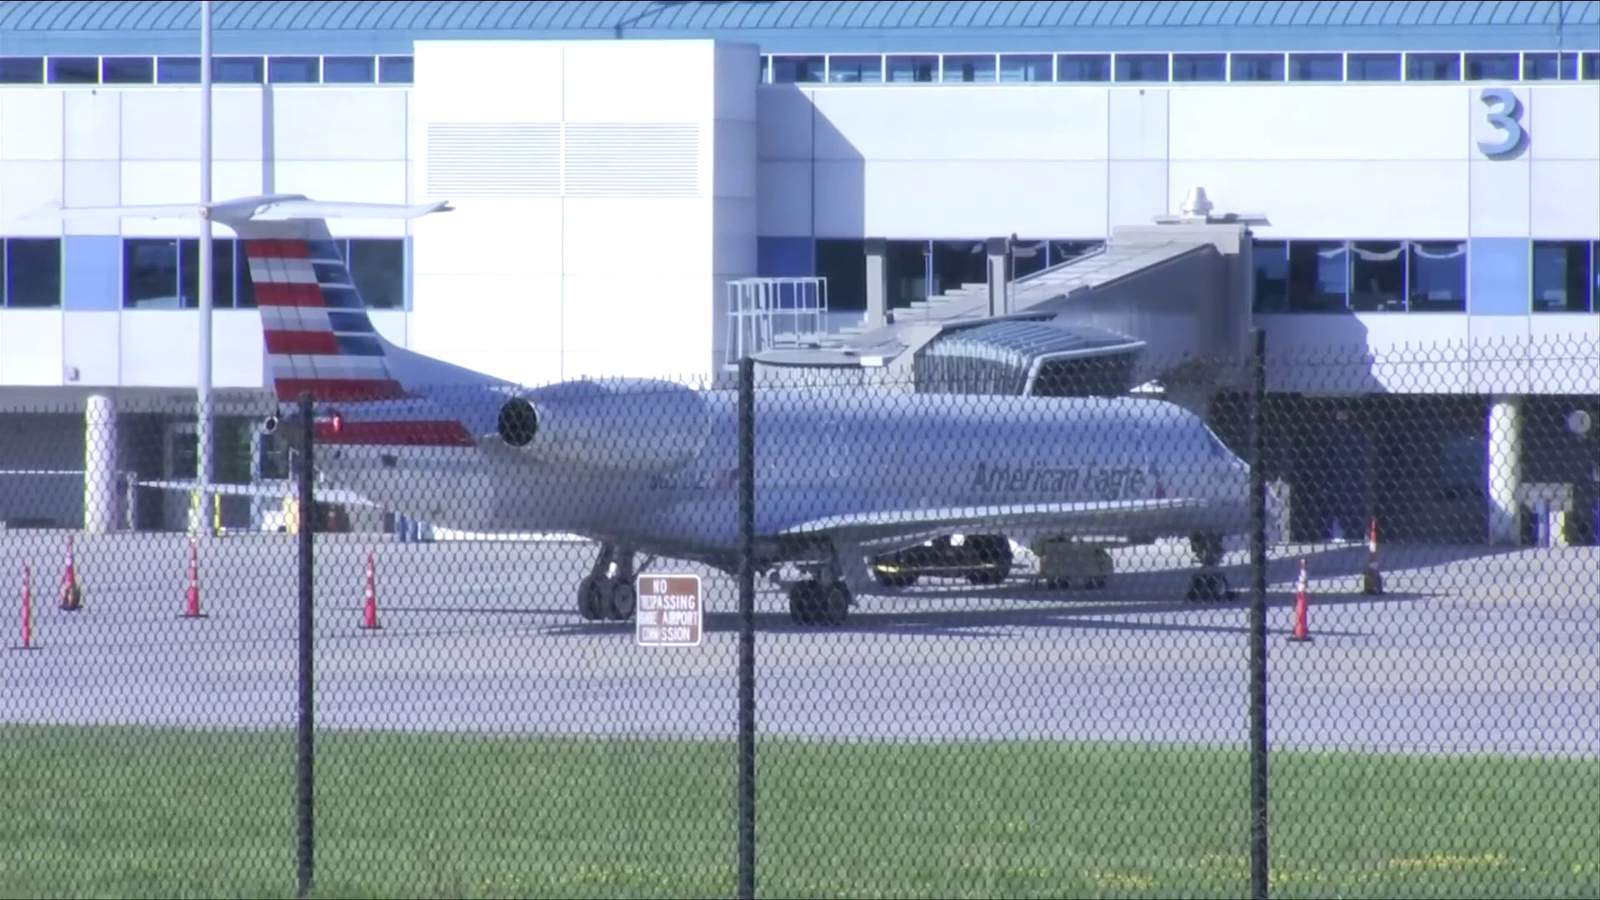 Roanoke-Blacksburg Regional Airport not heavily impacted by airline layoffs